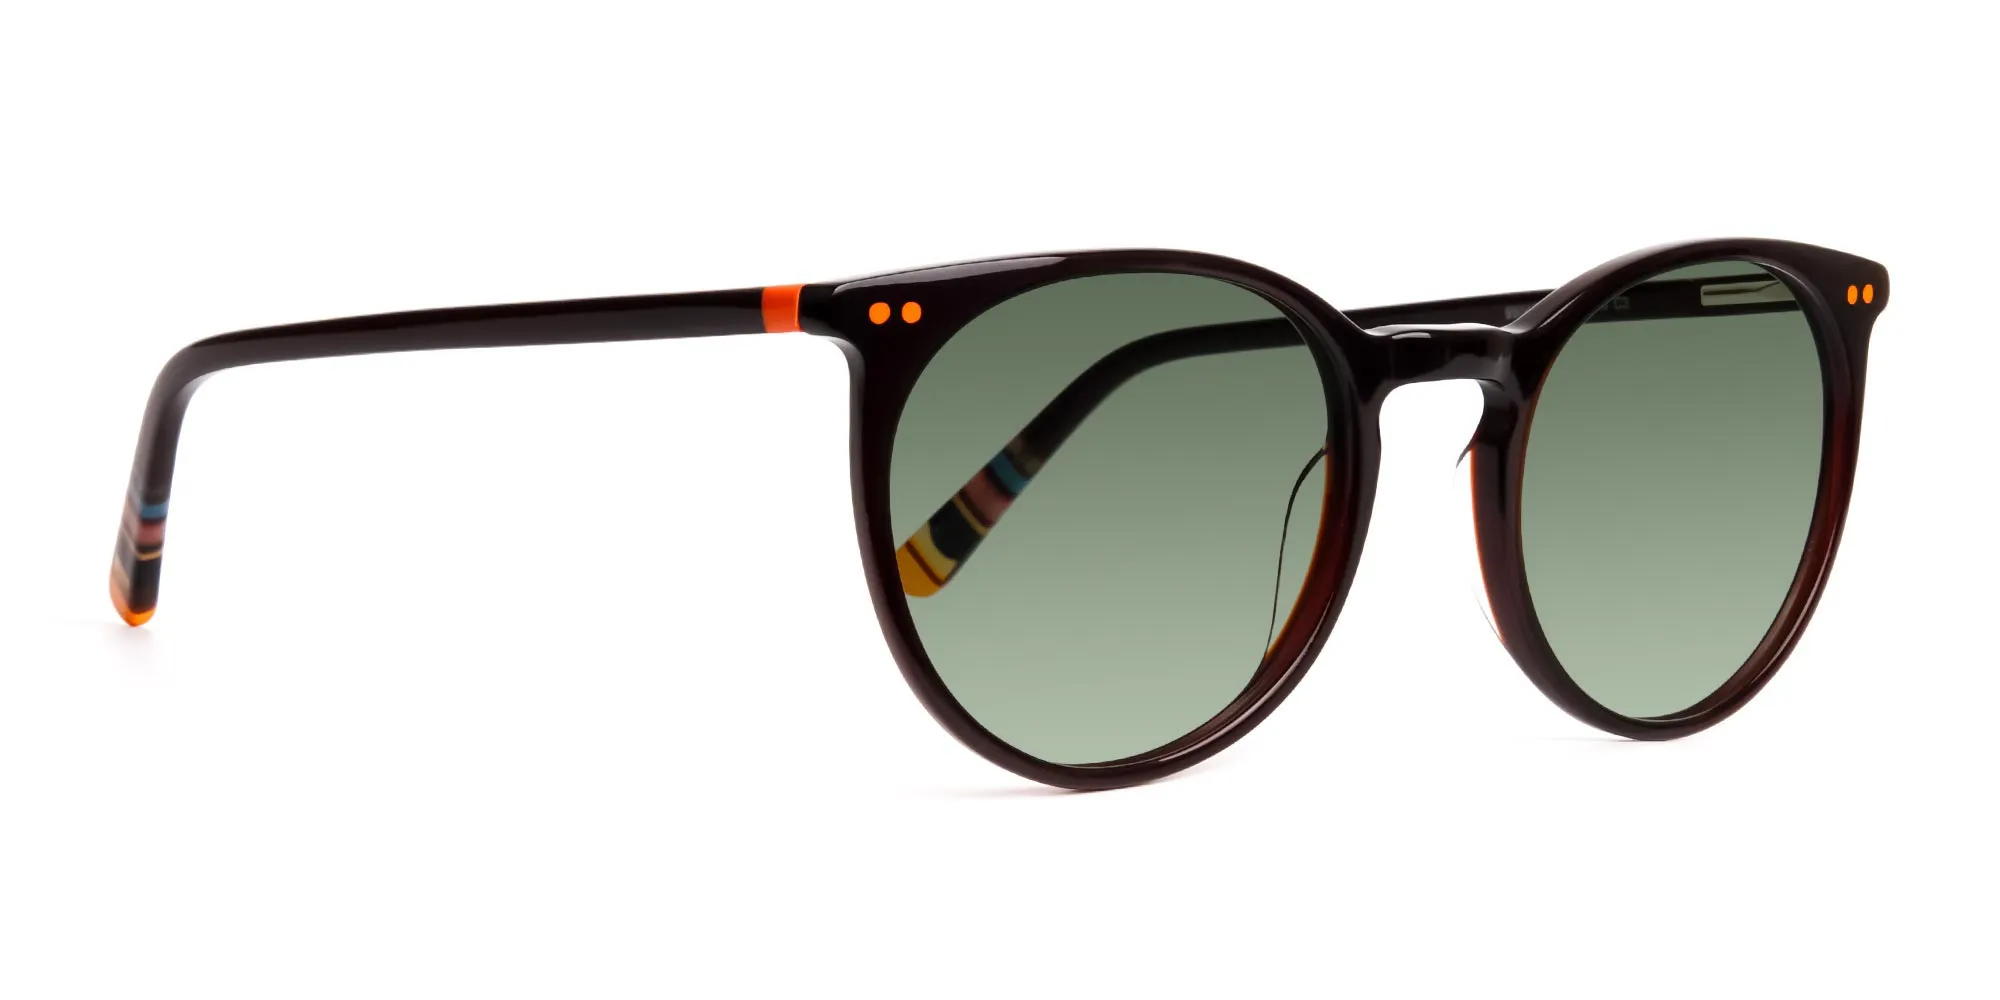 dark-brown-round-green-tinted-sunglasses-frames-2